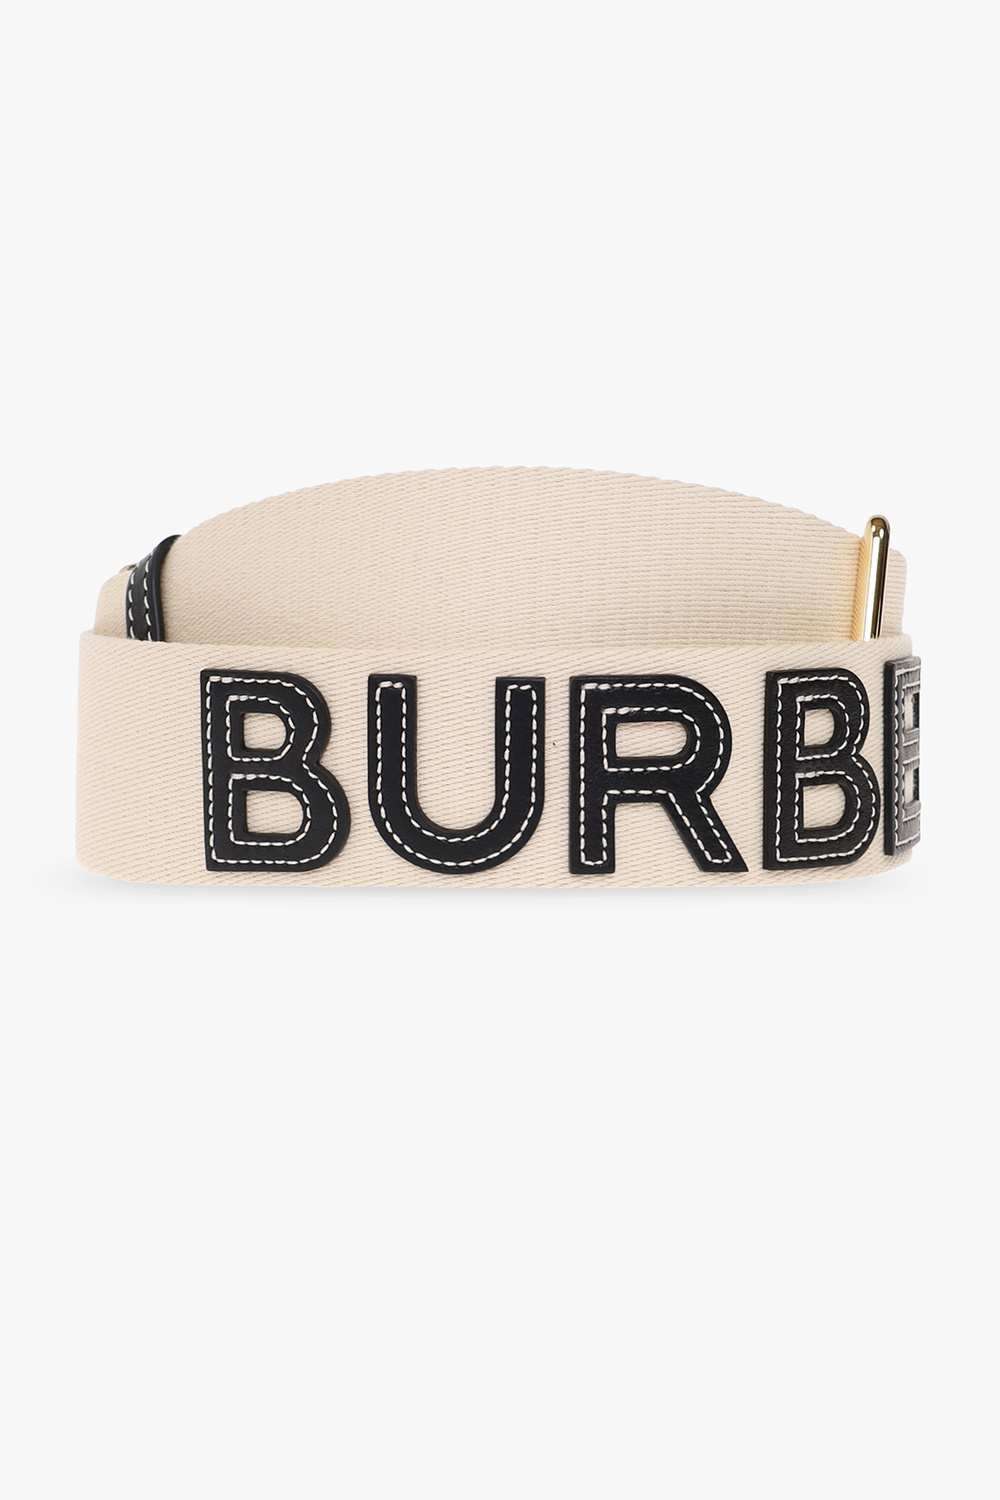 Burberry, Accessories, Mens Burberry Belt Size 34 85